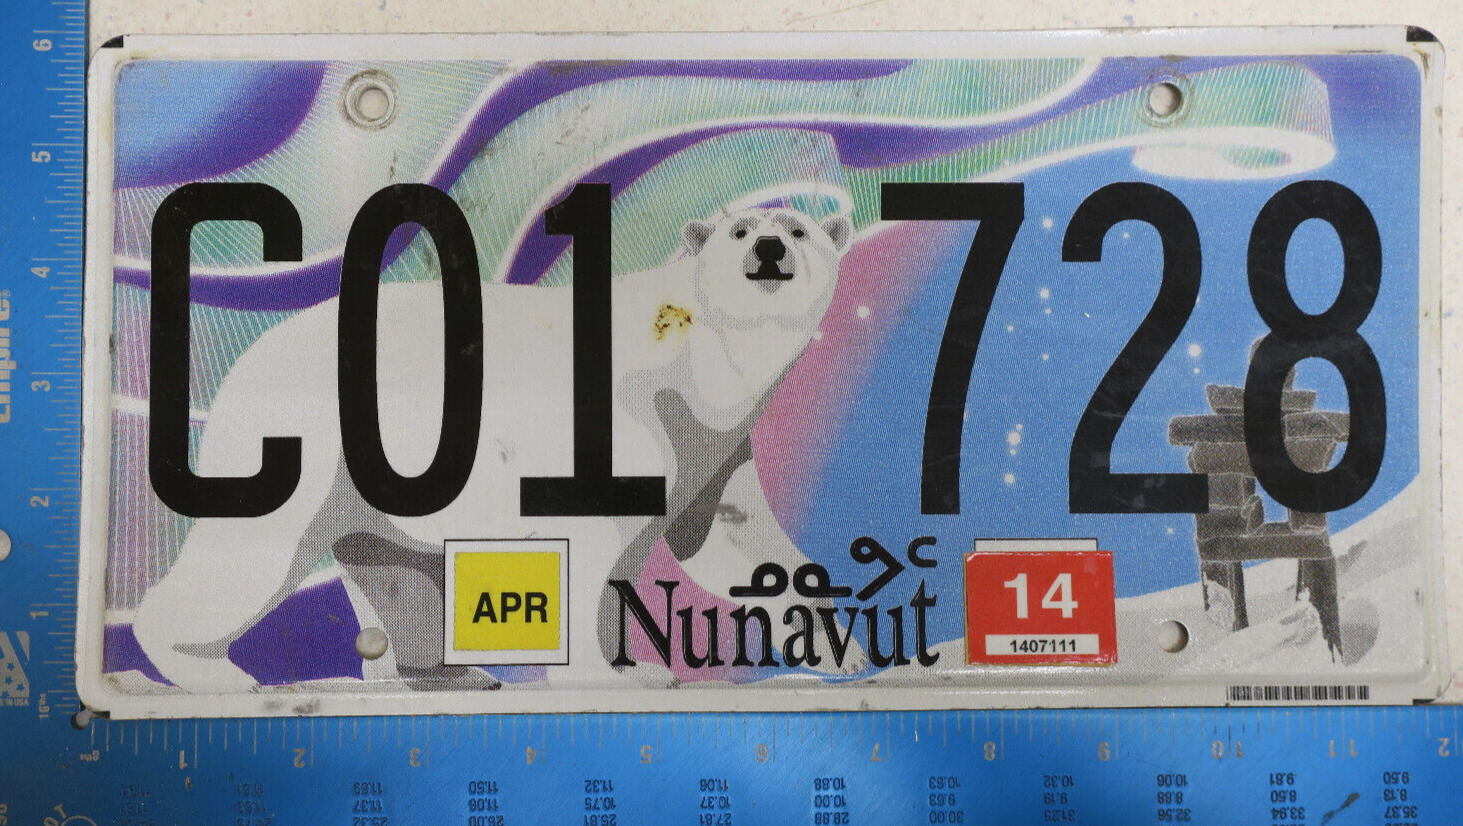 Nunavut License Plate 2014 Commercial Com Graphic Bear Tag 14 Trl C01728 1728